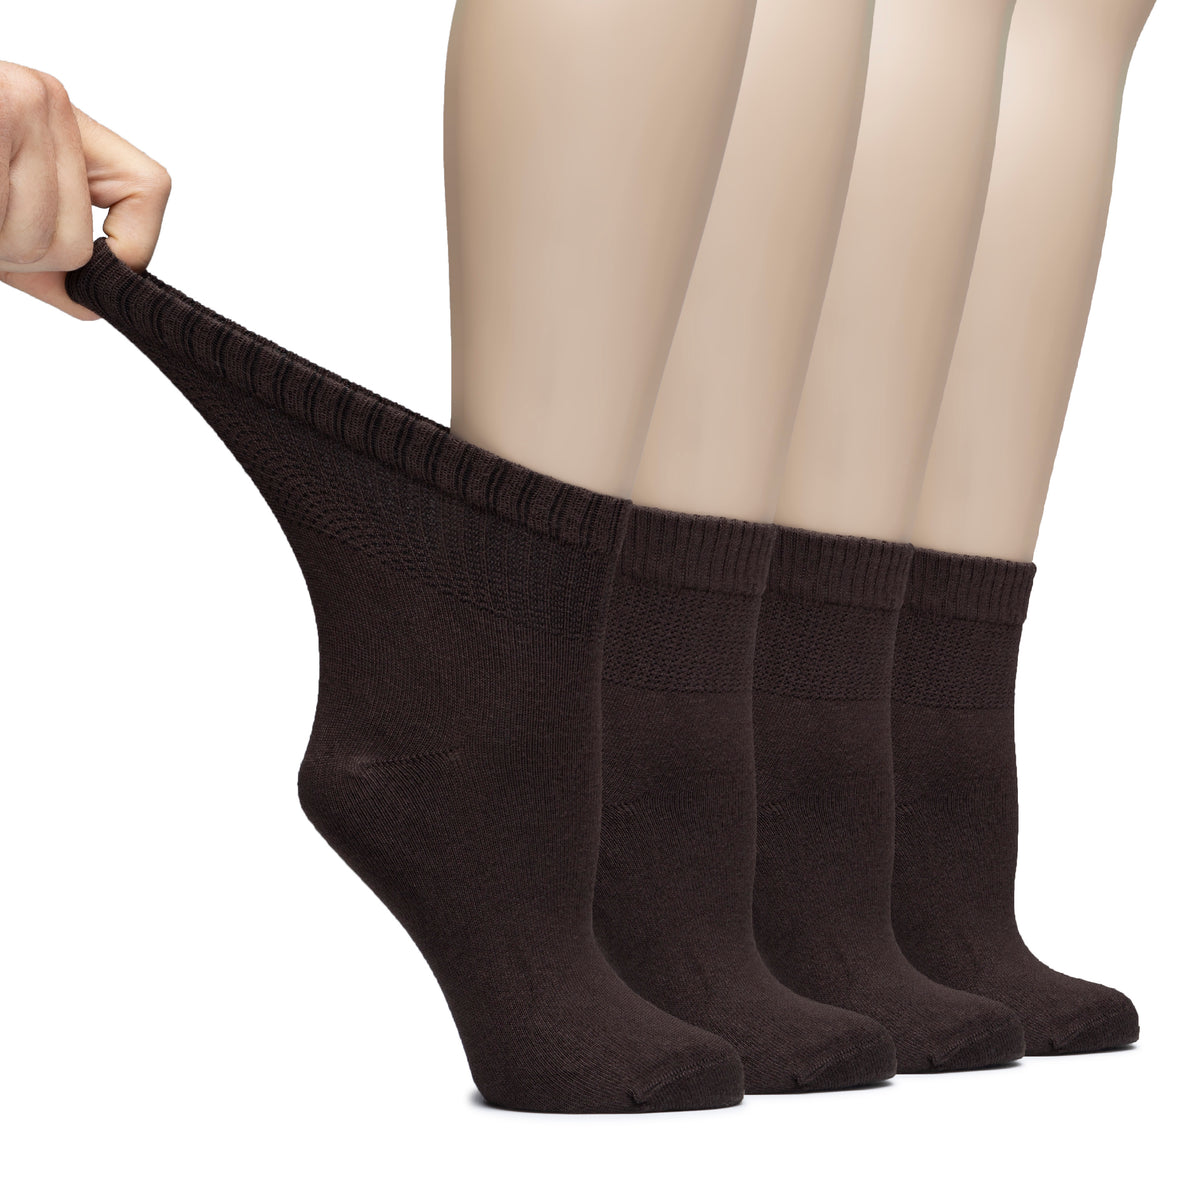 Hugh Ugoli Lightweight Women's Diabetic Ankle Socks Bamboo Thin Socks Seamless Toe and Non-Binding Top, 4 Pairs, , Shoe Size: 6-9/10-12 | Shoe Size: 10-12 | Dark Brown